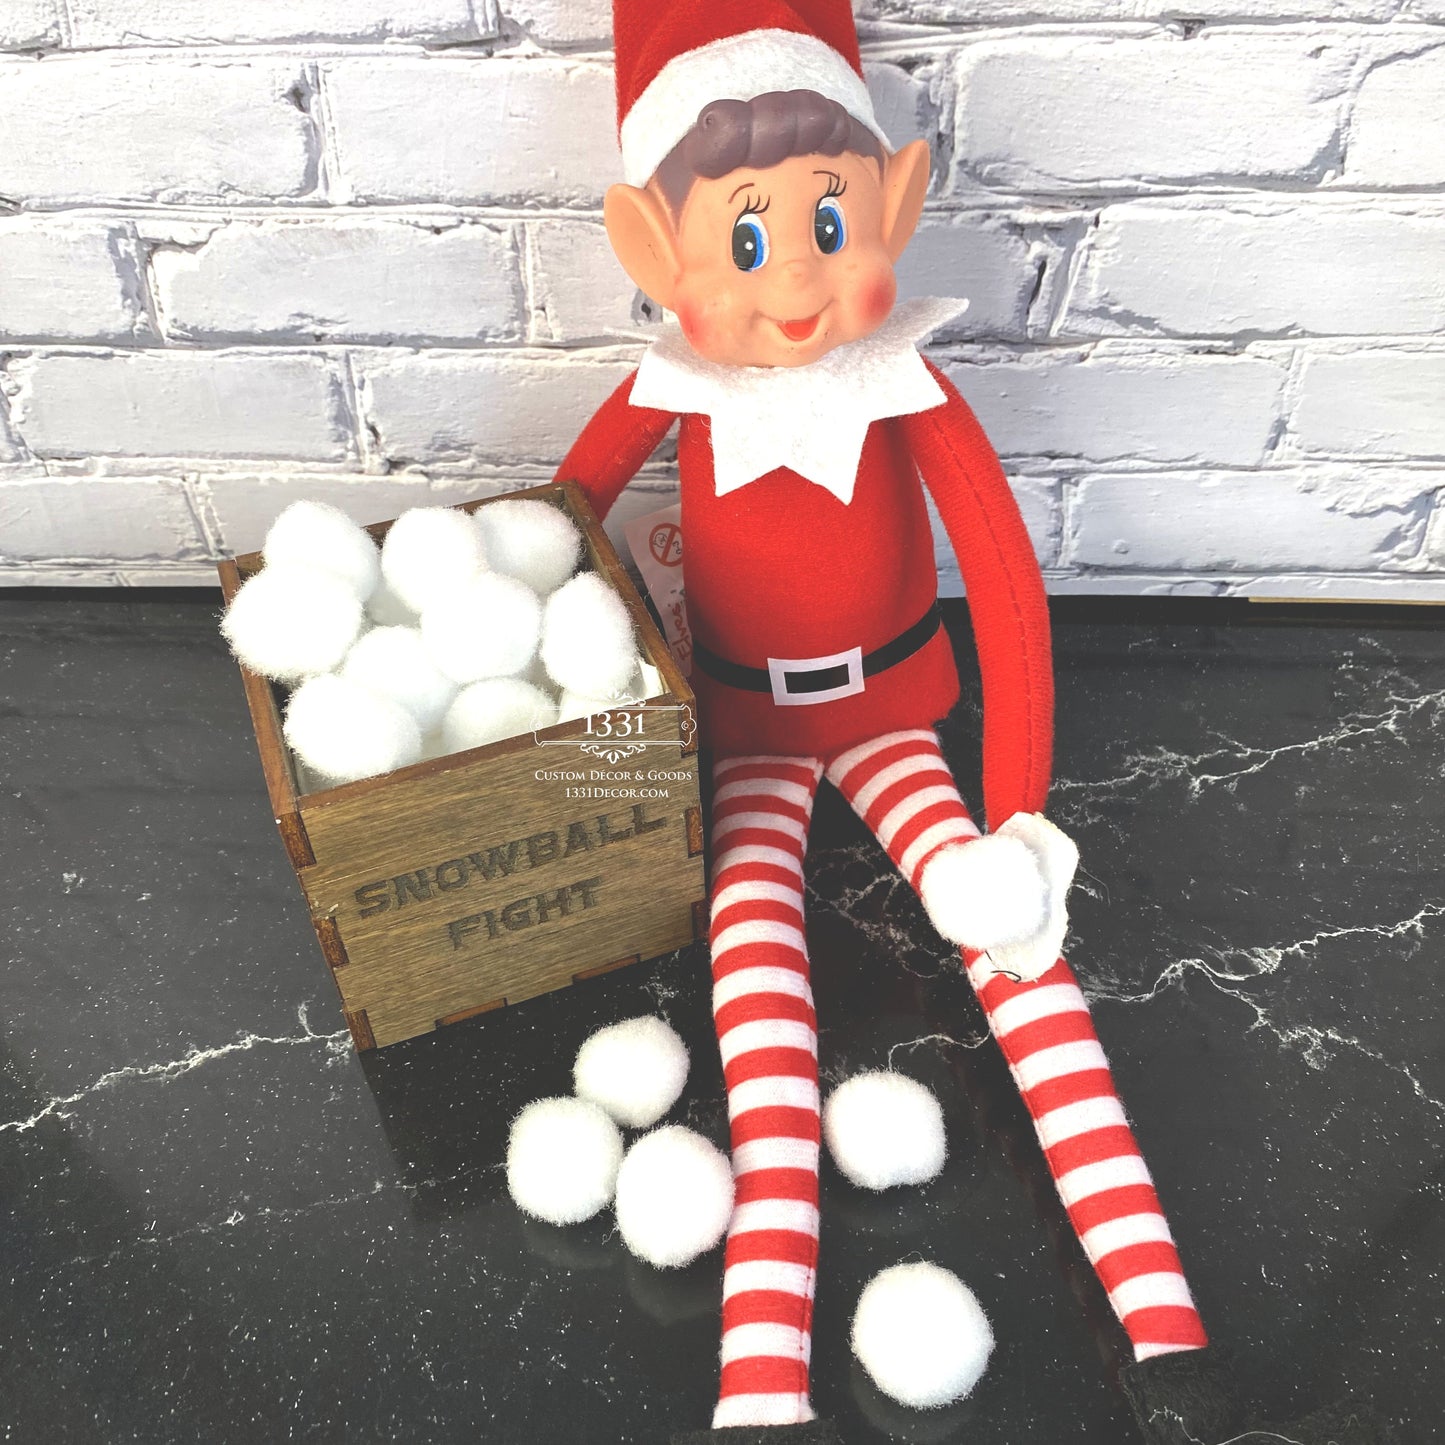 Christmas Elf Kit: Snowball Fight